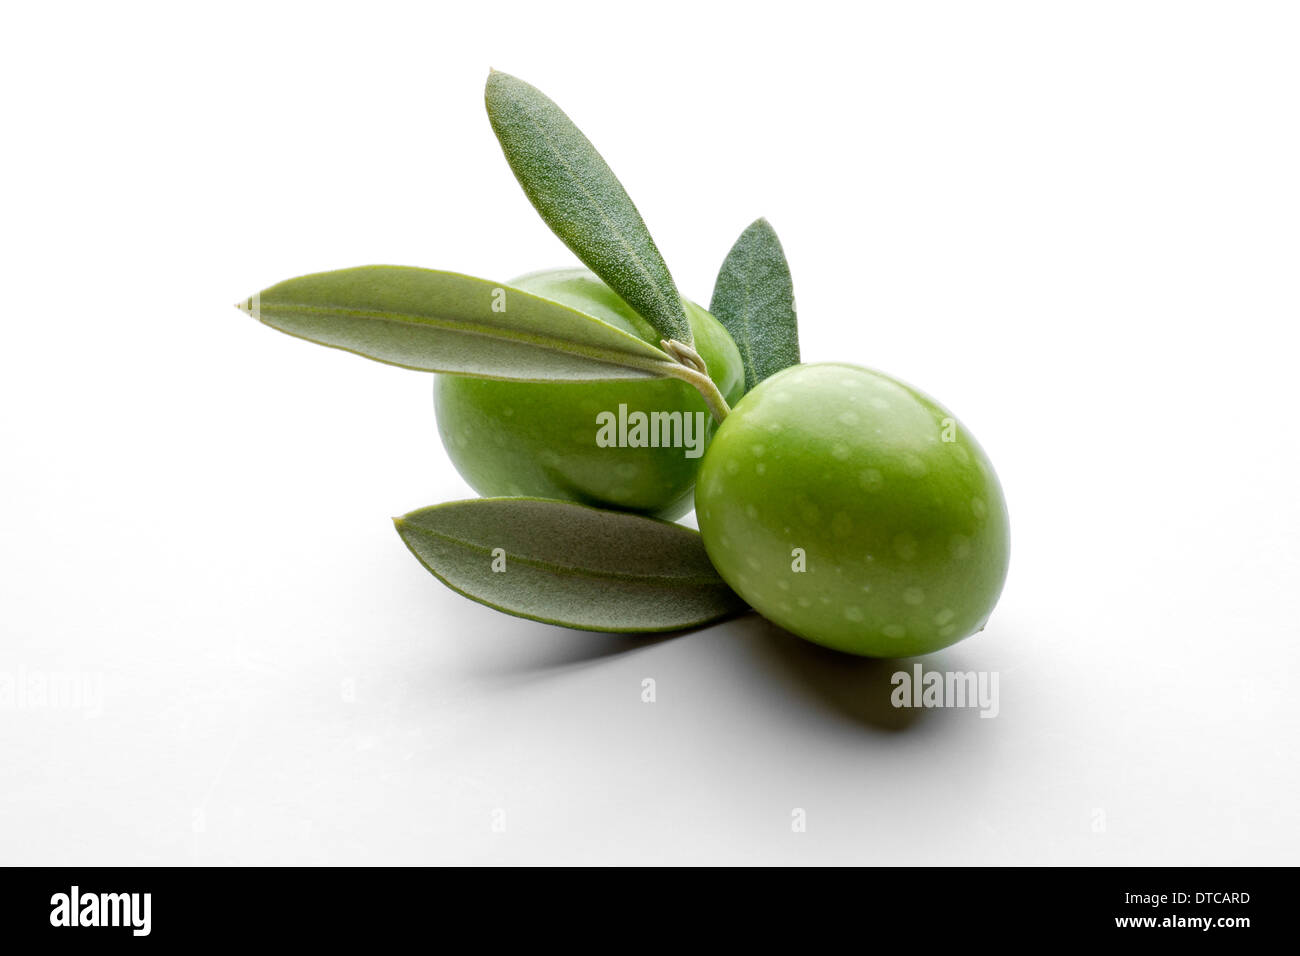 Rameau d'olives aceituna en rama de olivo Banque D'Images